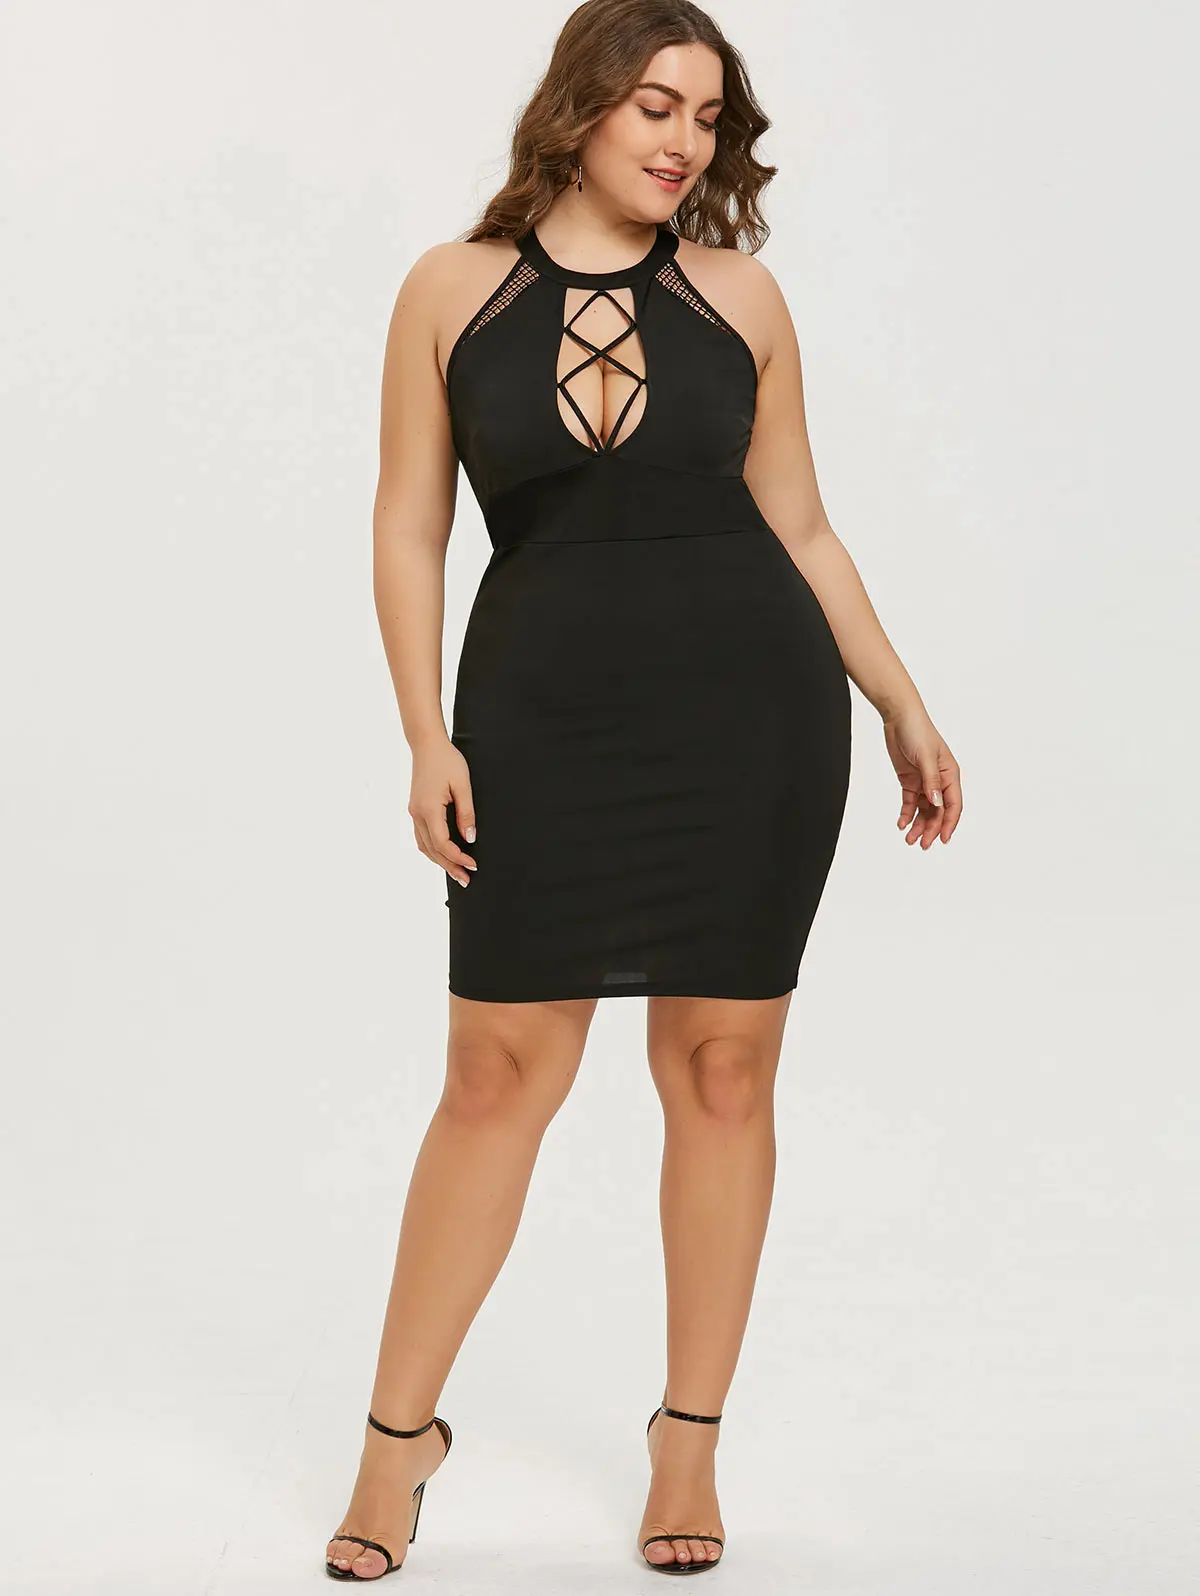 Aliexpress Buy Gamiss Women Plus Size Summer Dress Cut Out Sexy